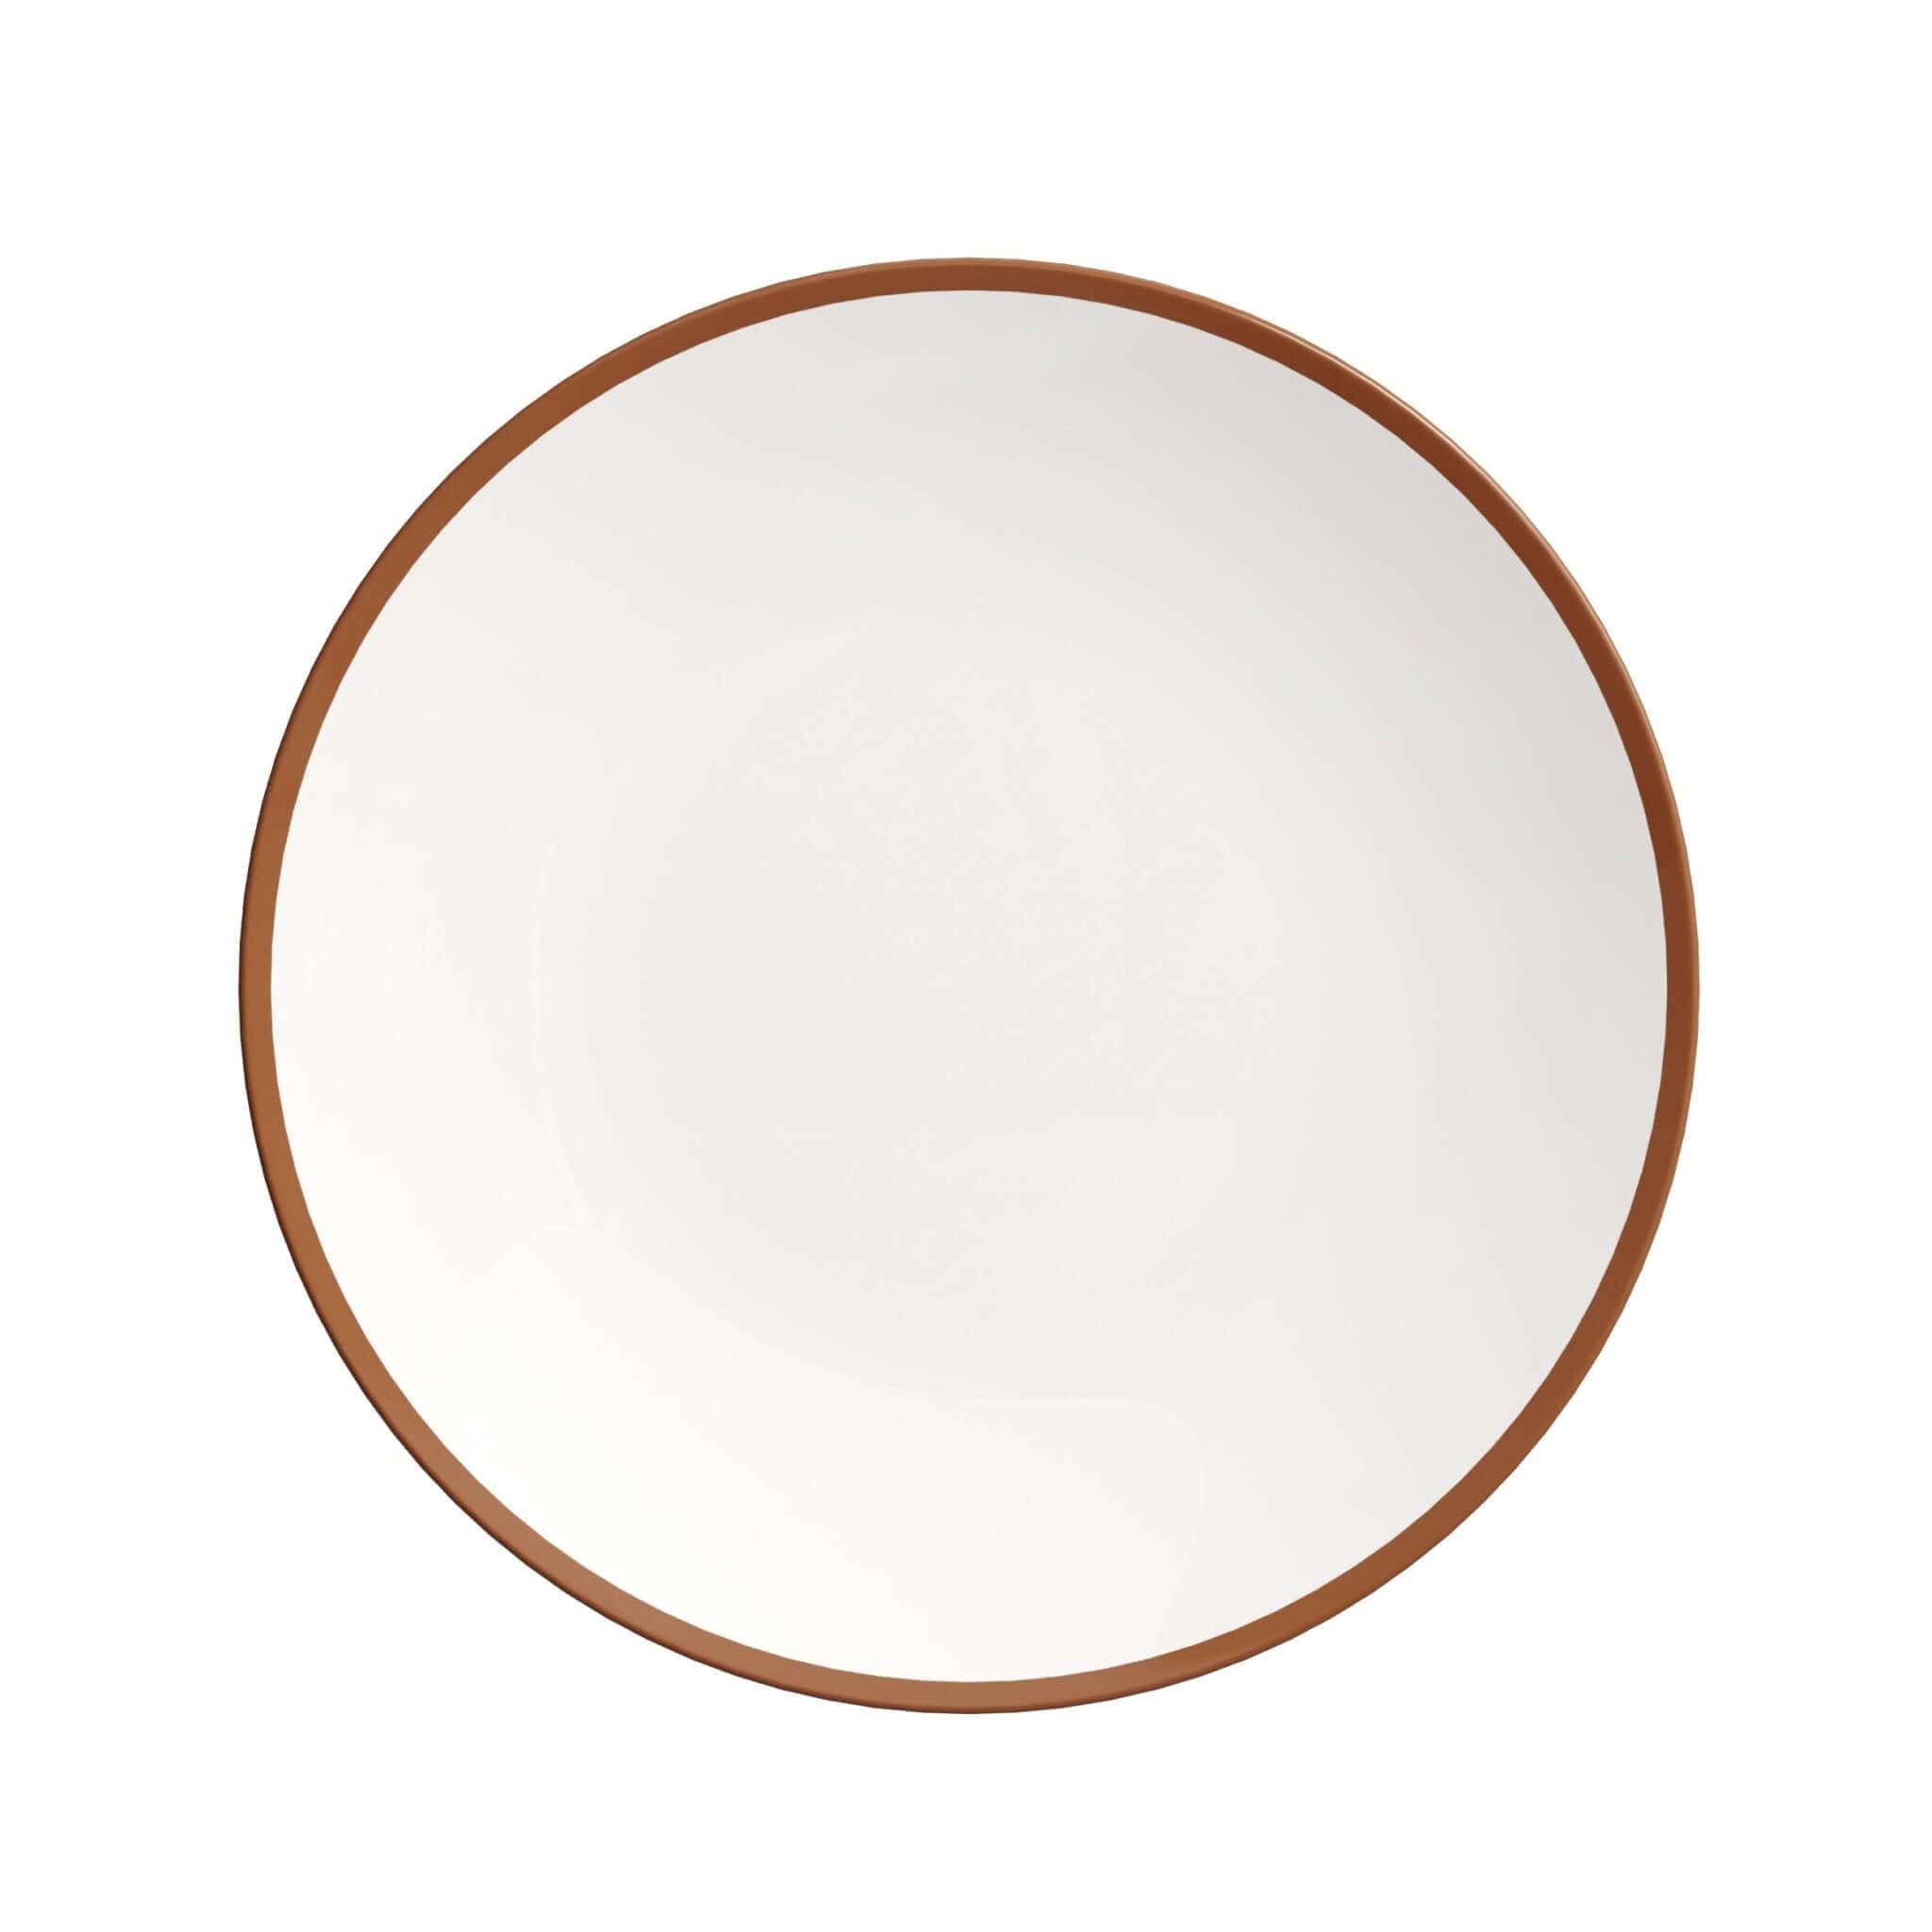 10" Rimonim Design Plastic Plates (40 Count) - Yom Tov Settings